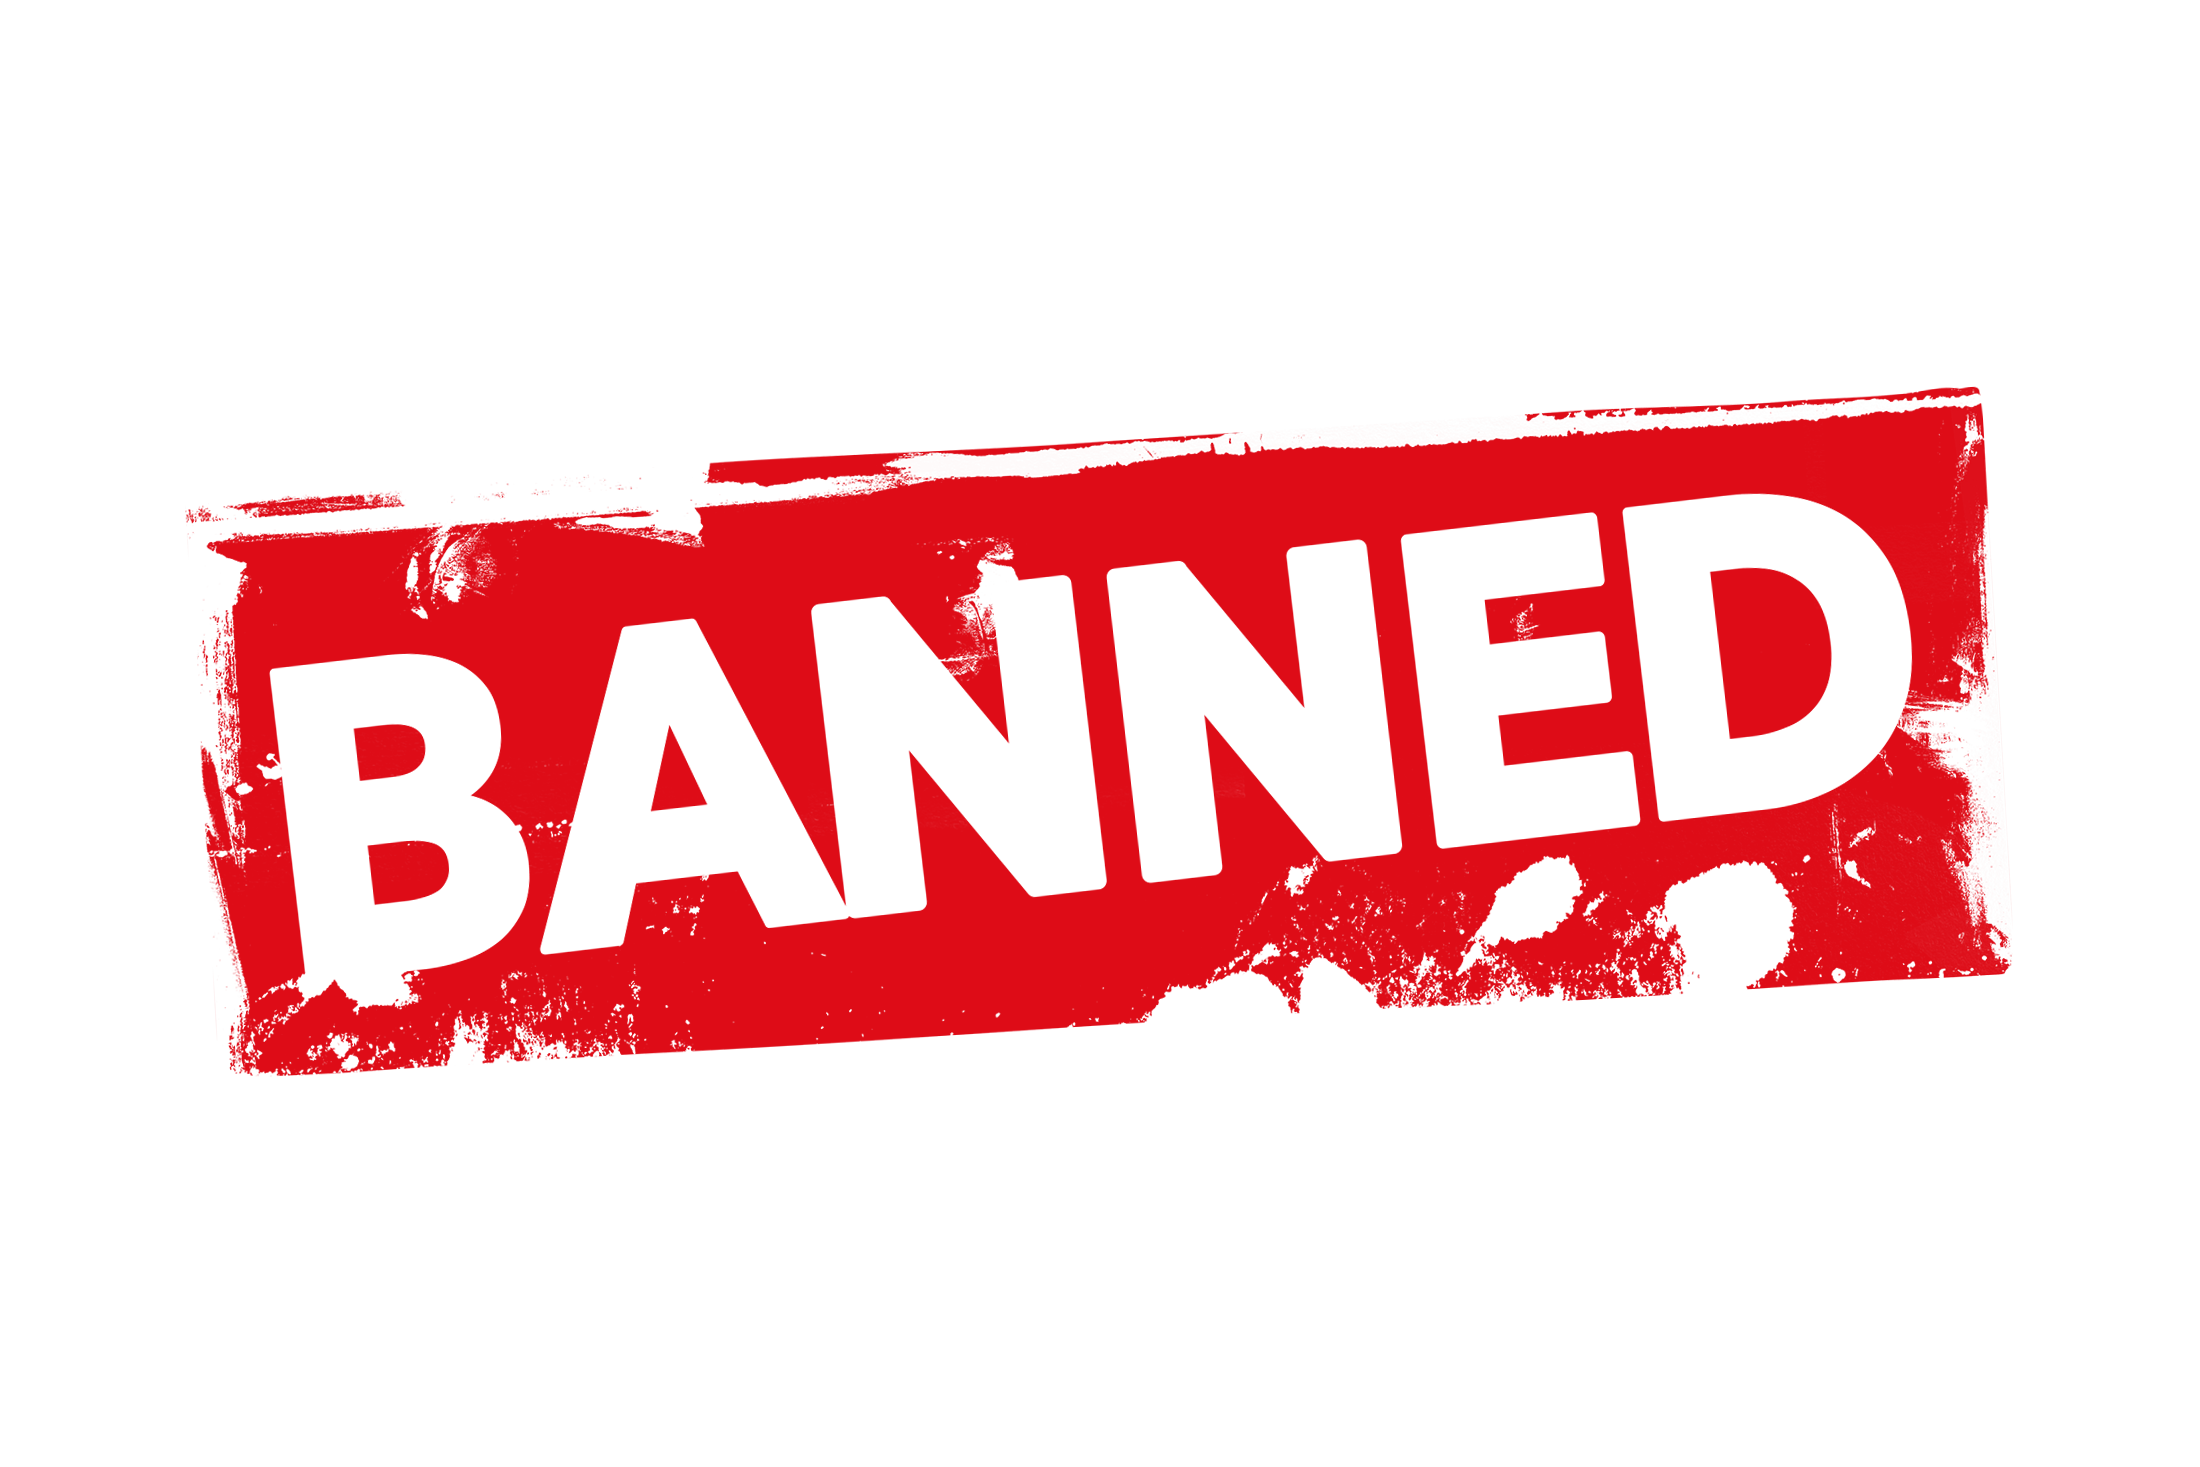 Banned Transparent